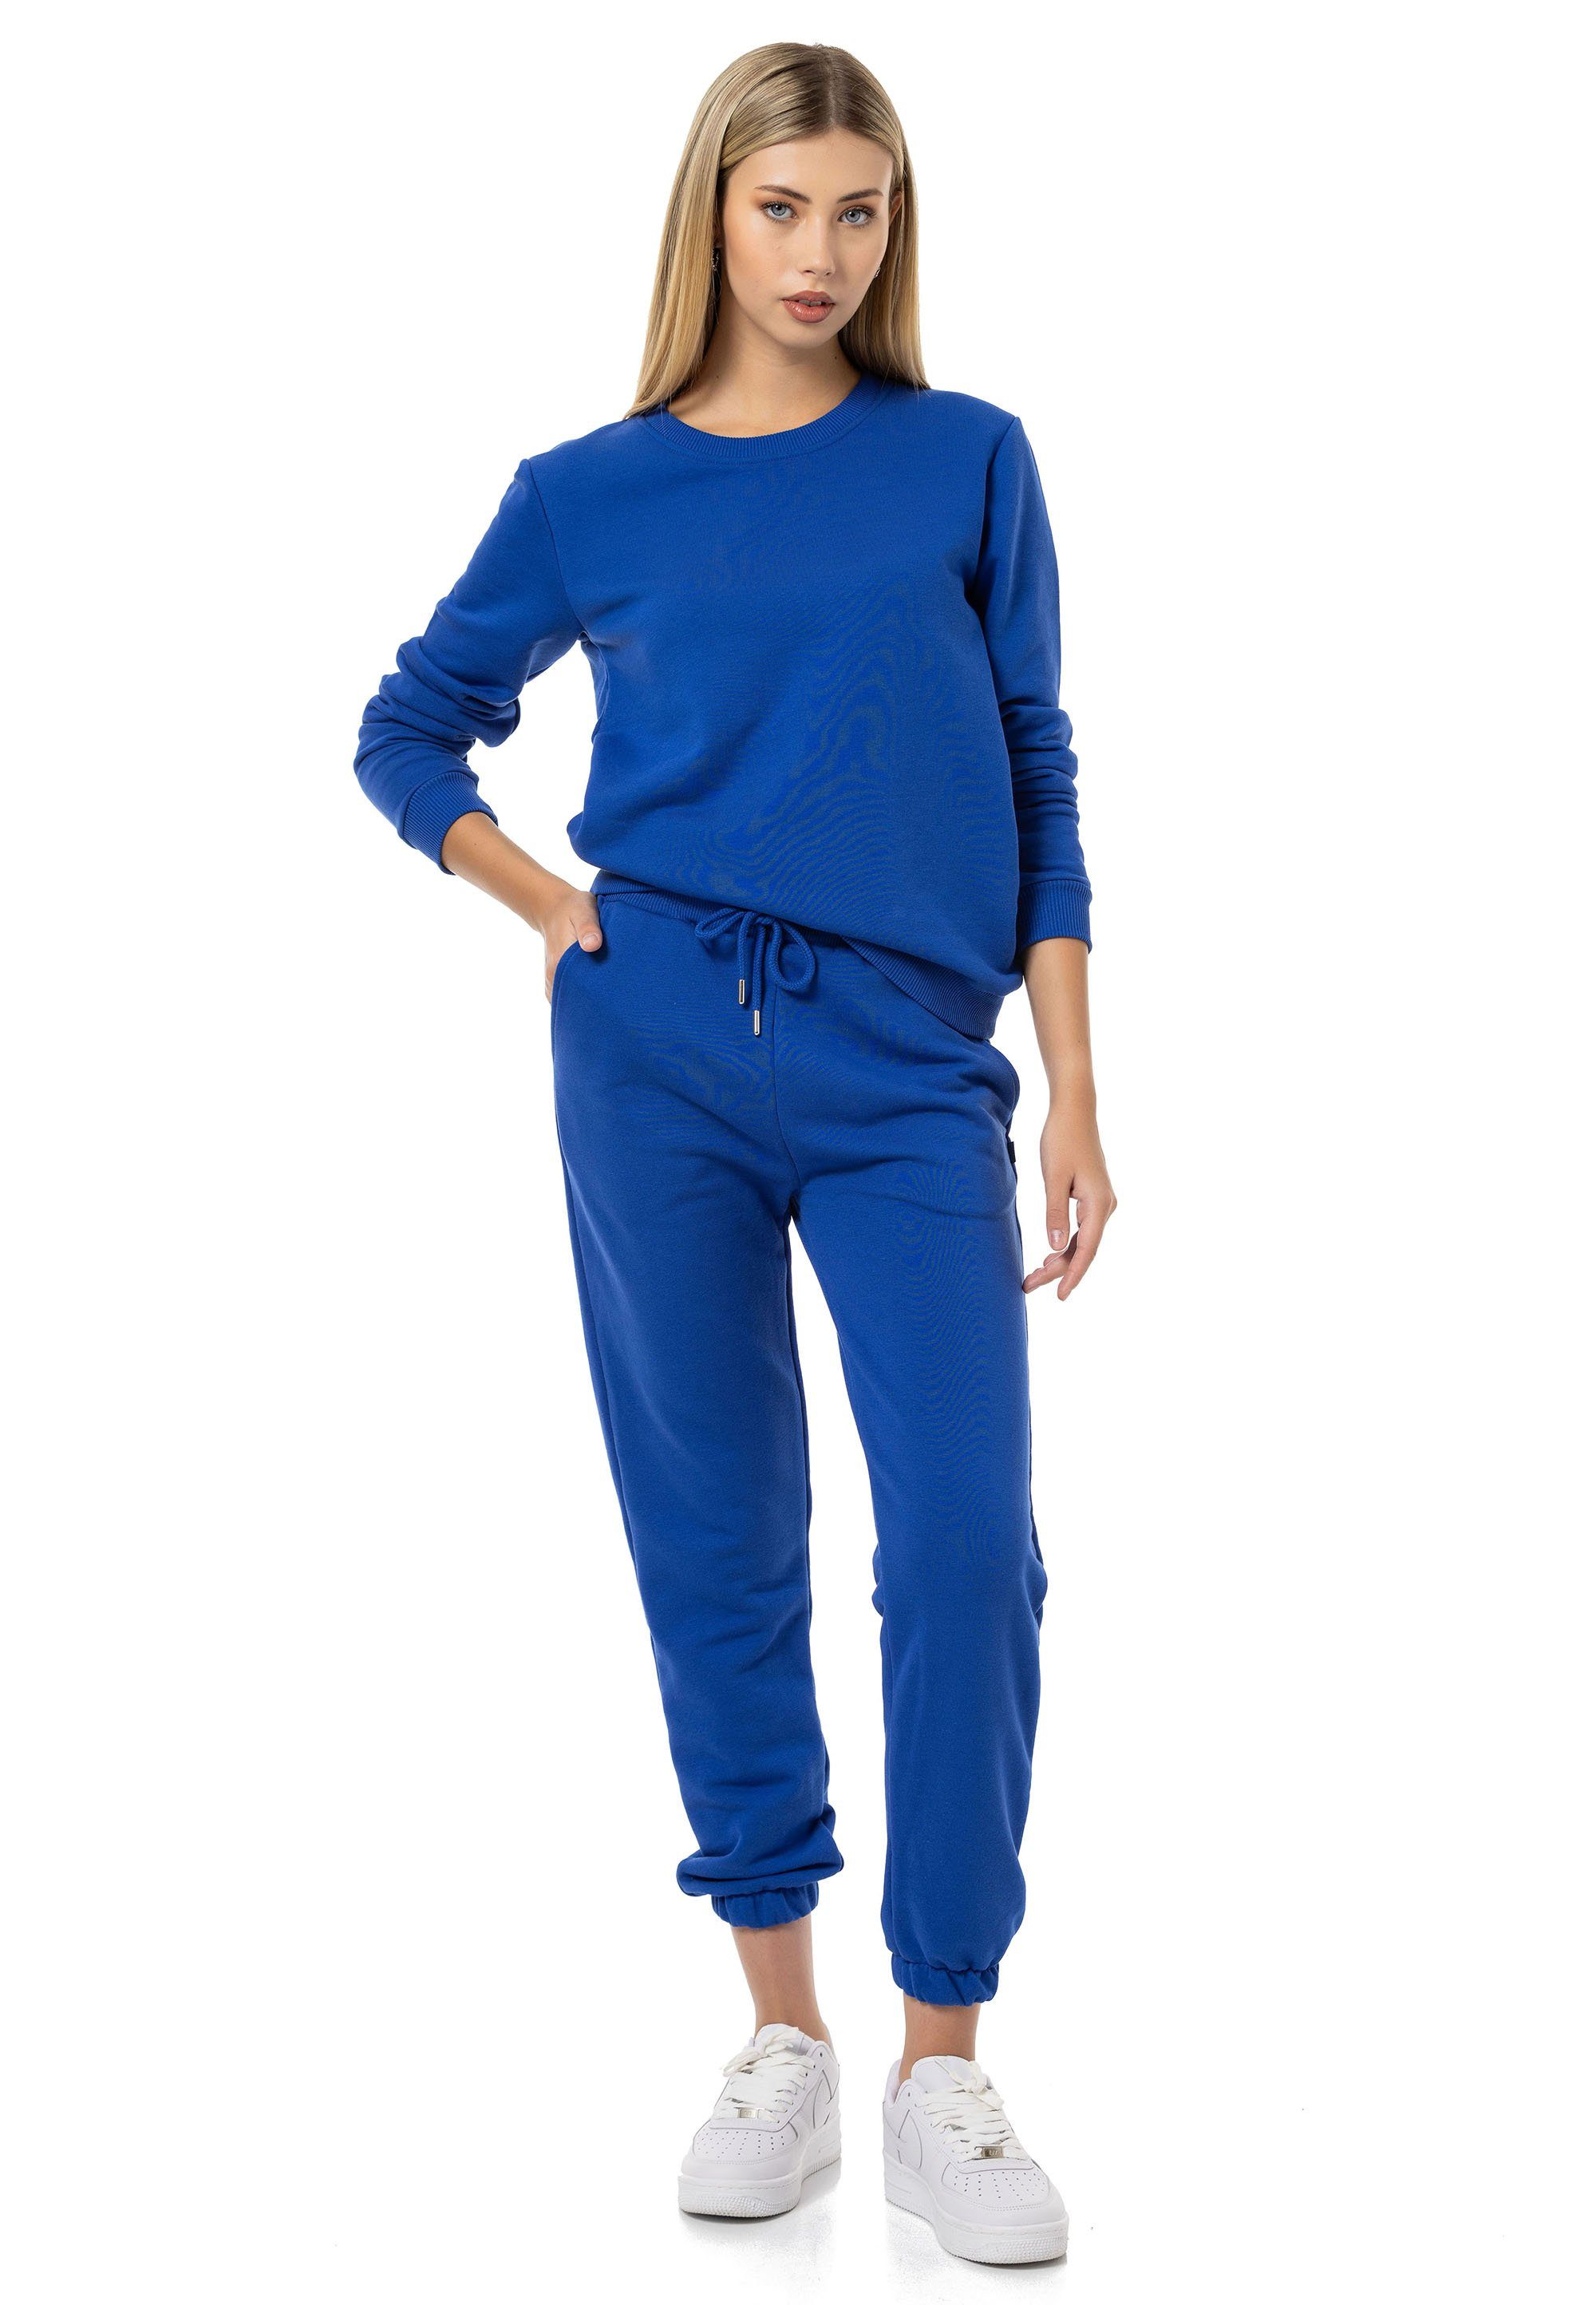 RedBridge Saxeblau Sweatshirt Rundhals Qualität Pullover Premium